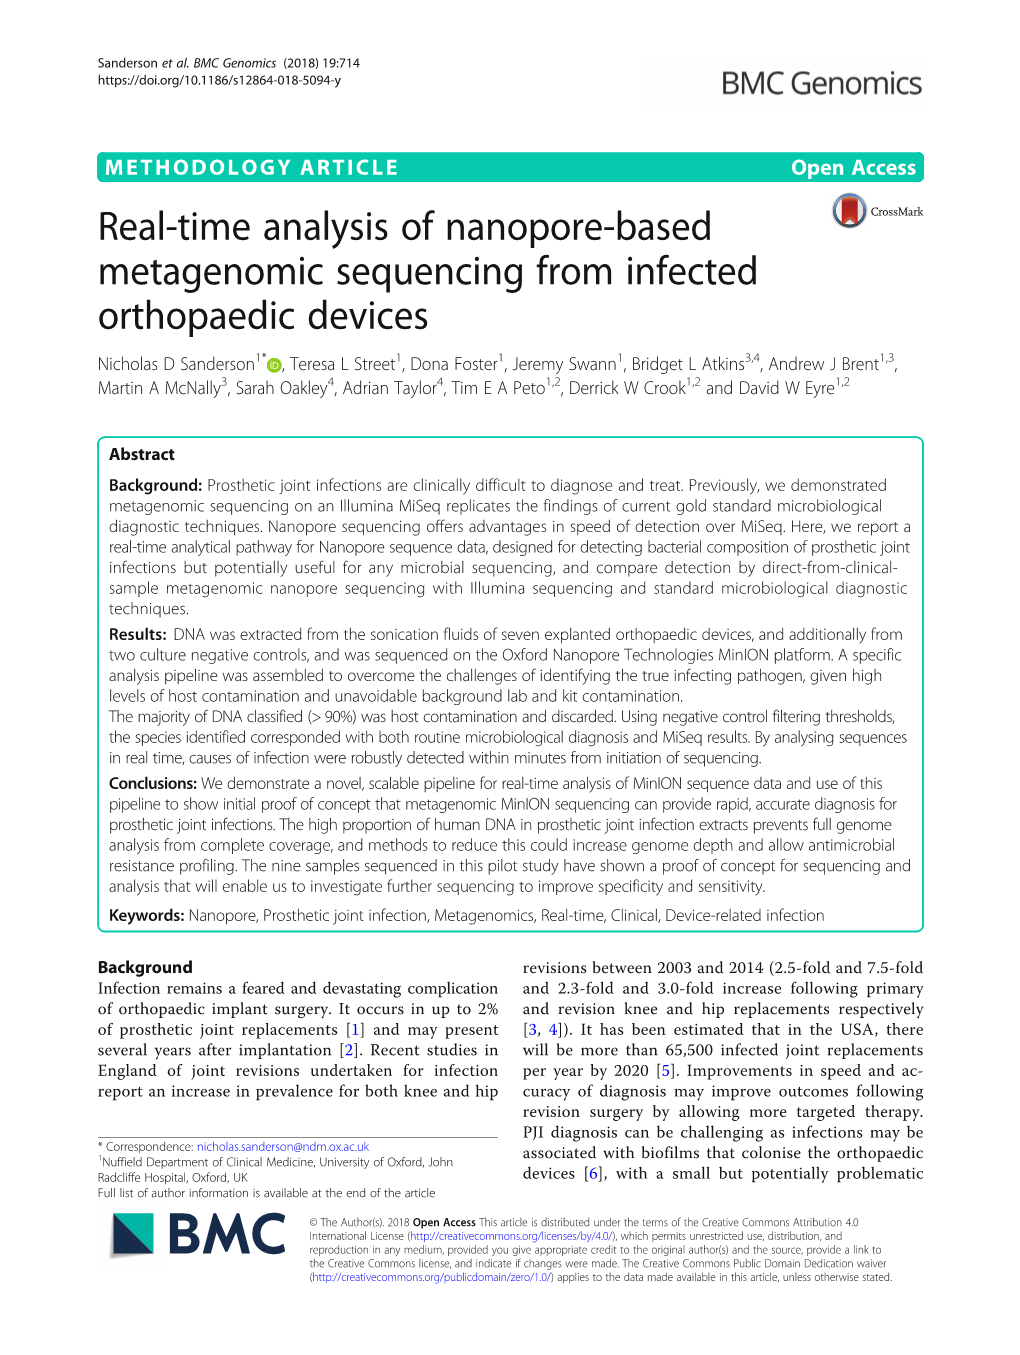 Real-Time Analysis of Nanopore-Based